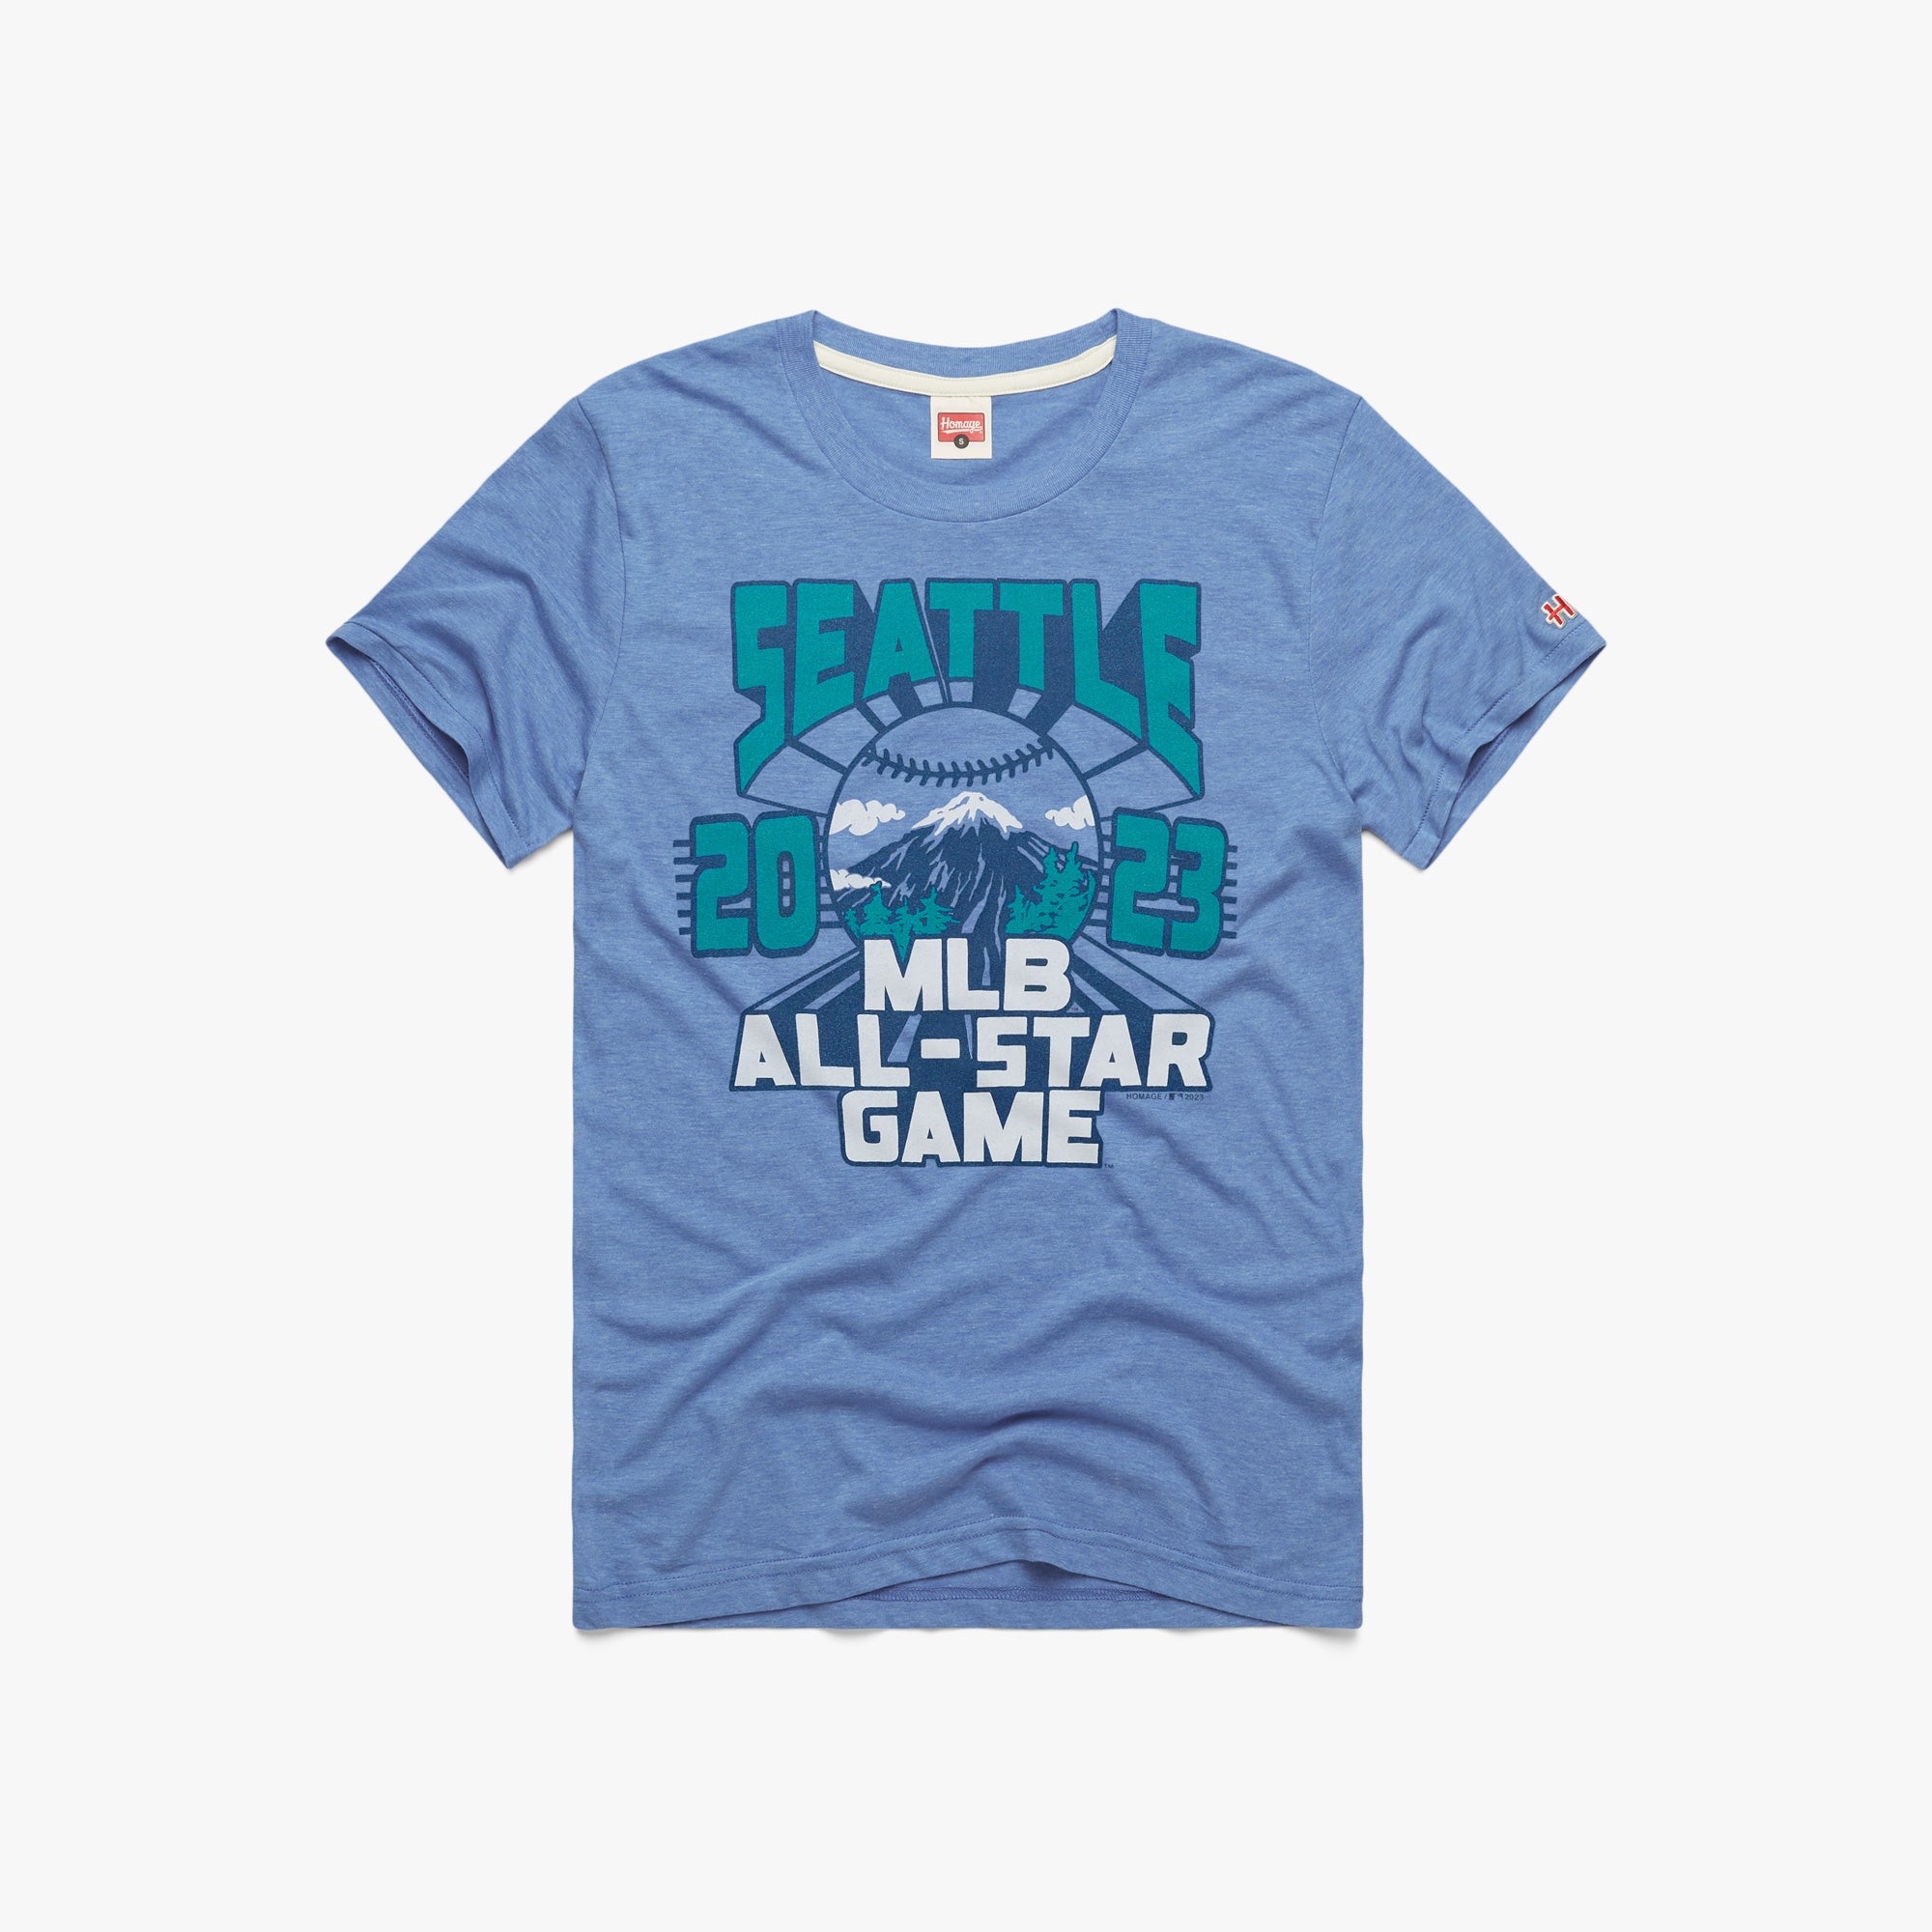 mlb all star game shirt